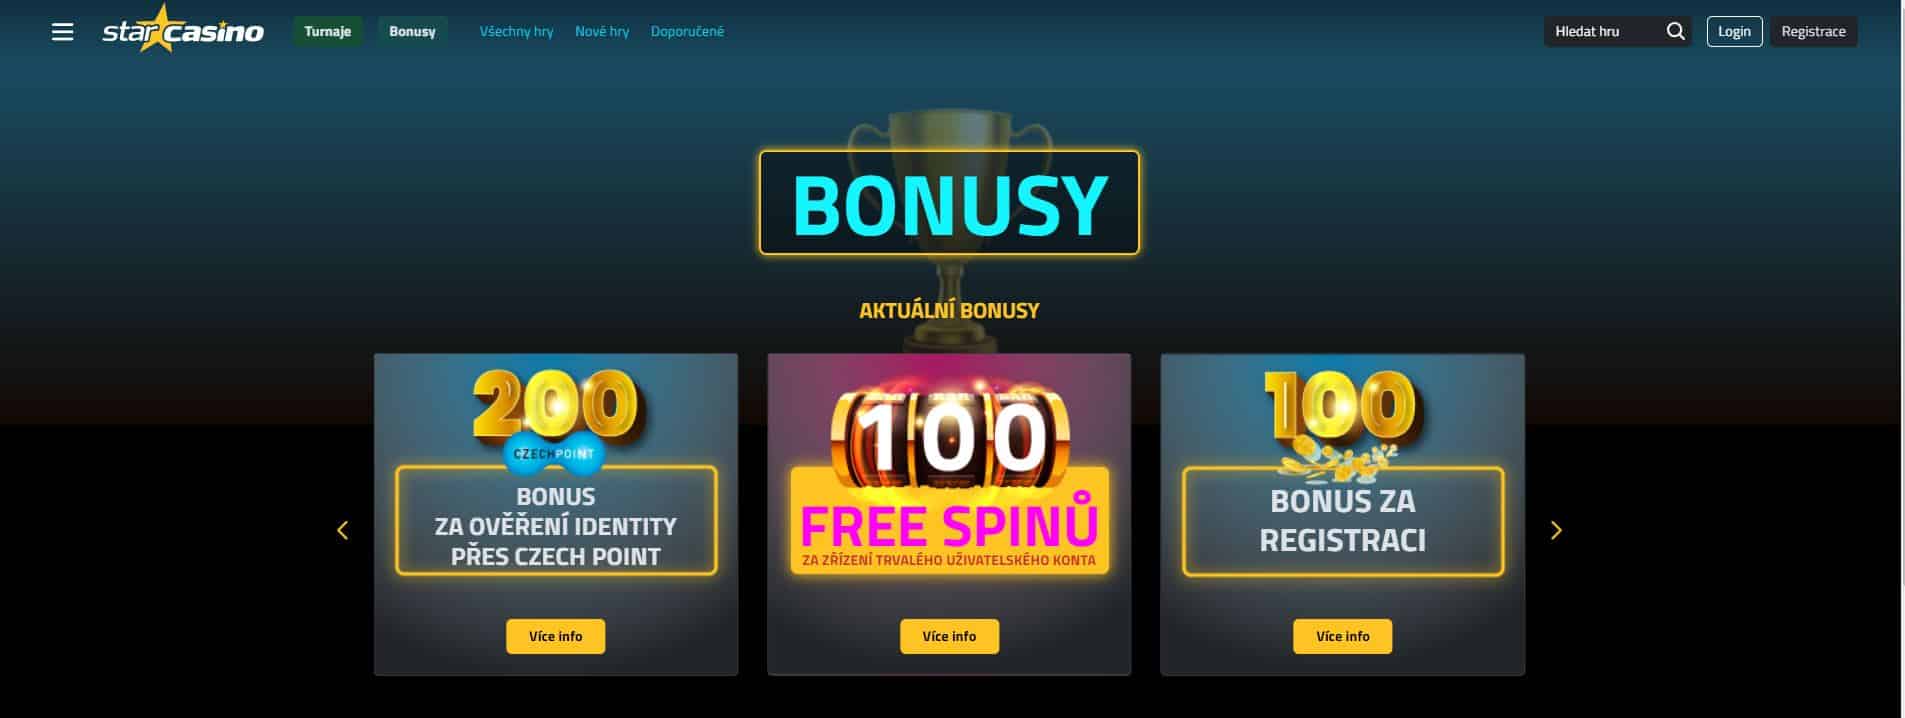 Star casino bonusy